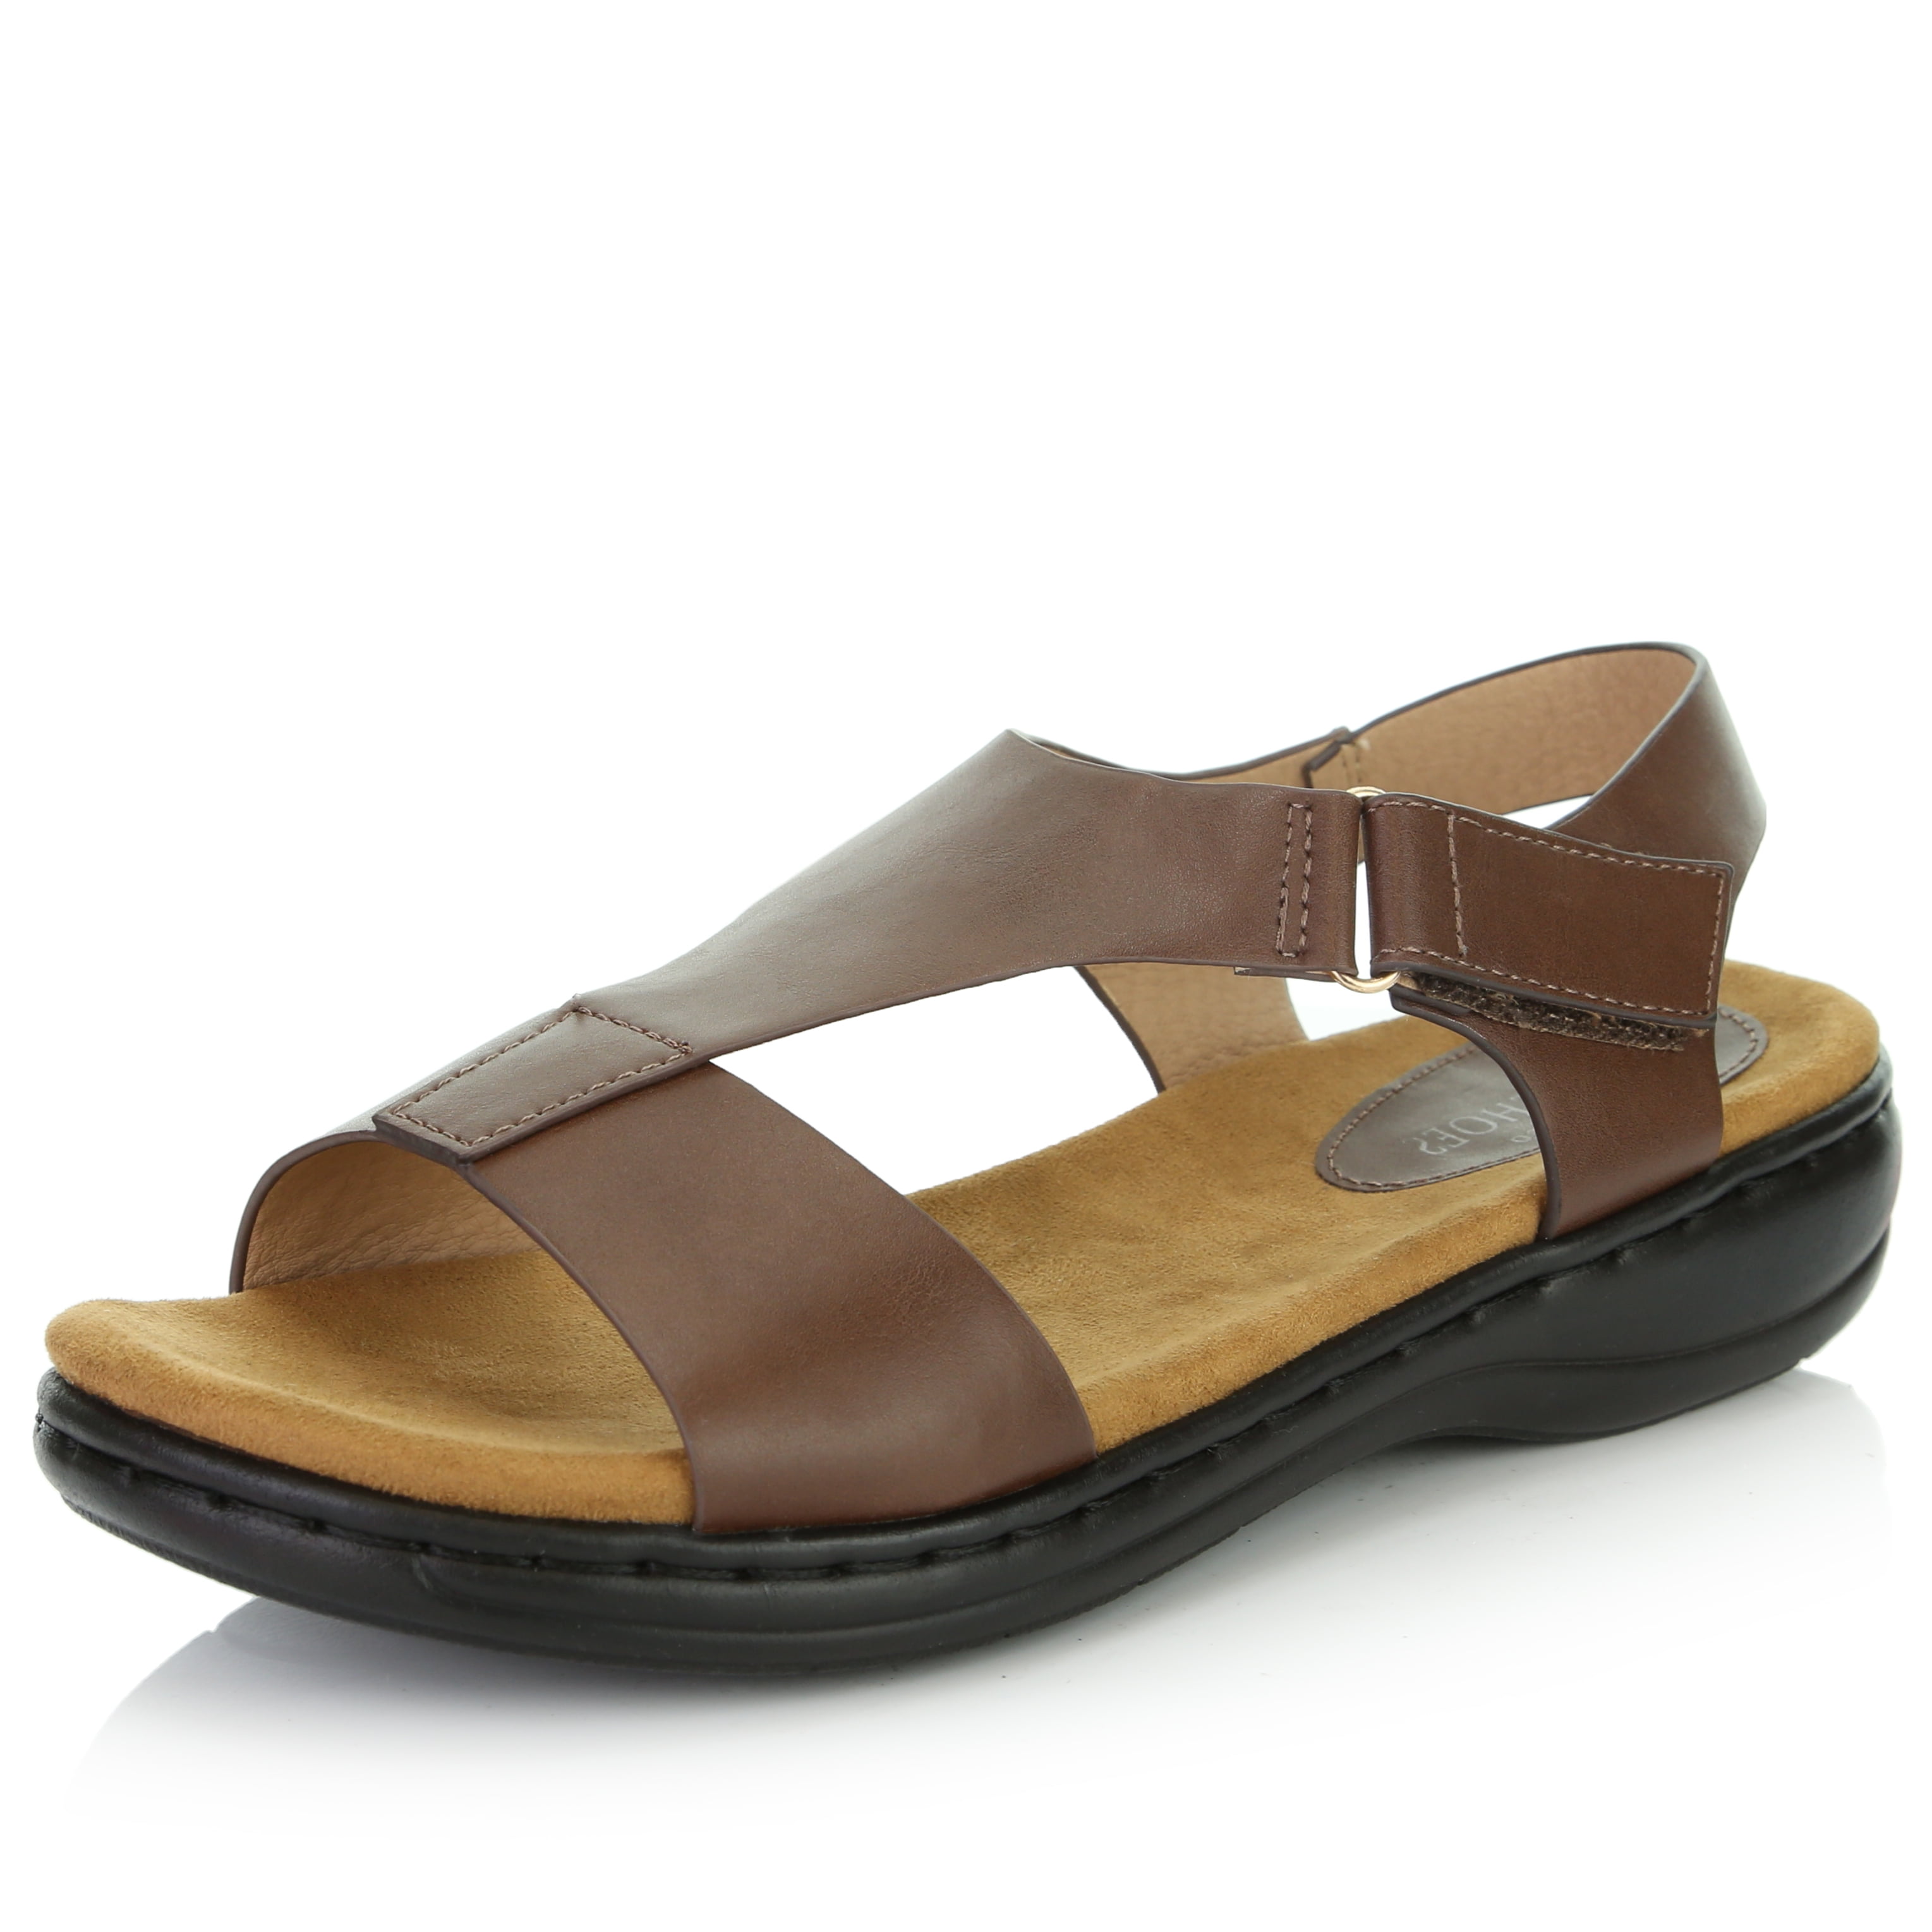 Women Comfy Simple Flat Sandal Shoes,Open Toe Leather Slipper Shoes,Summer Beach Sandals 